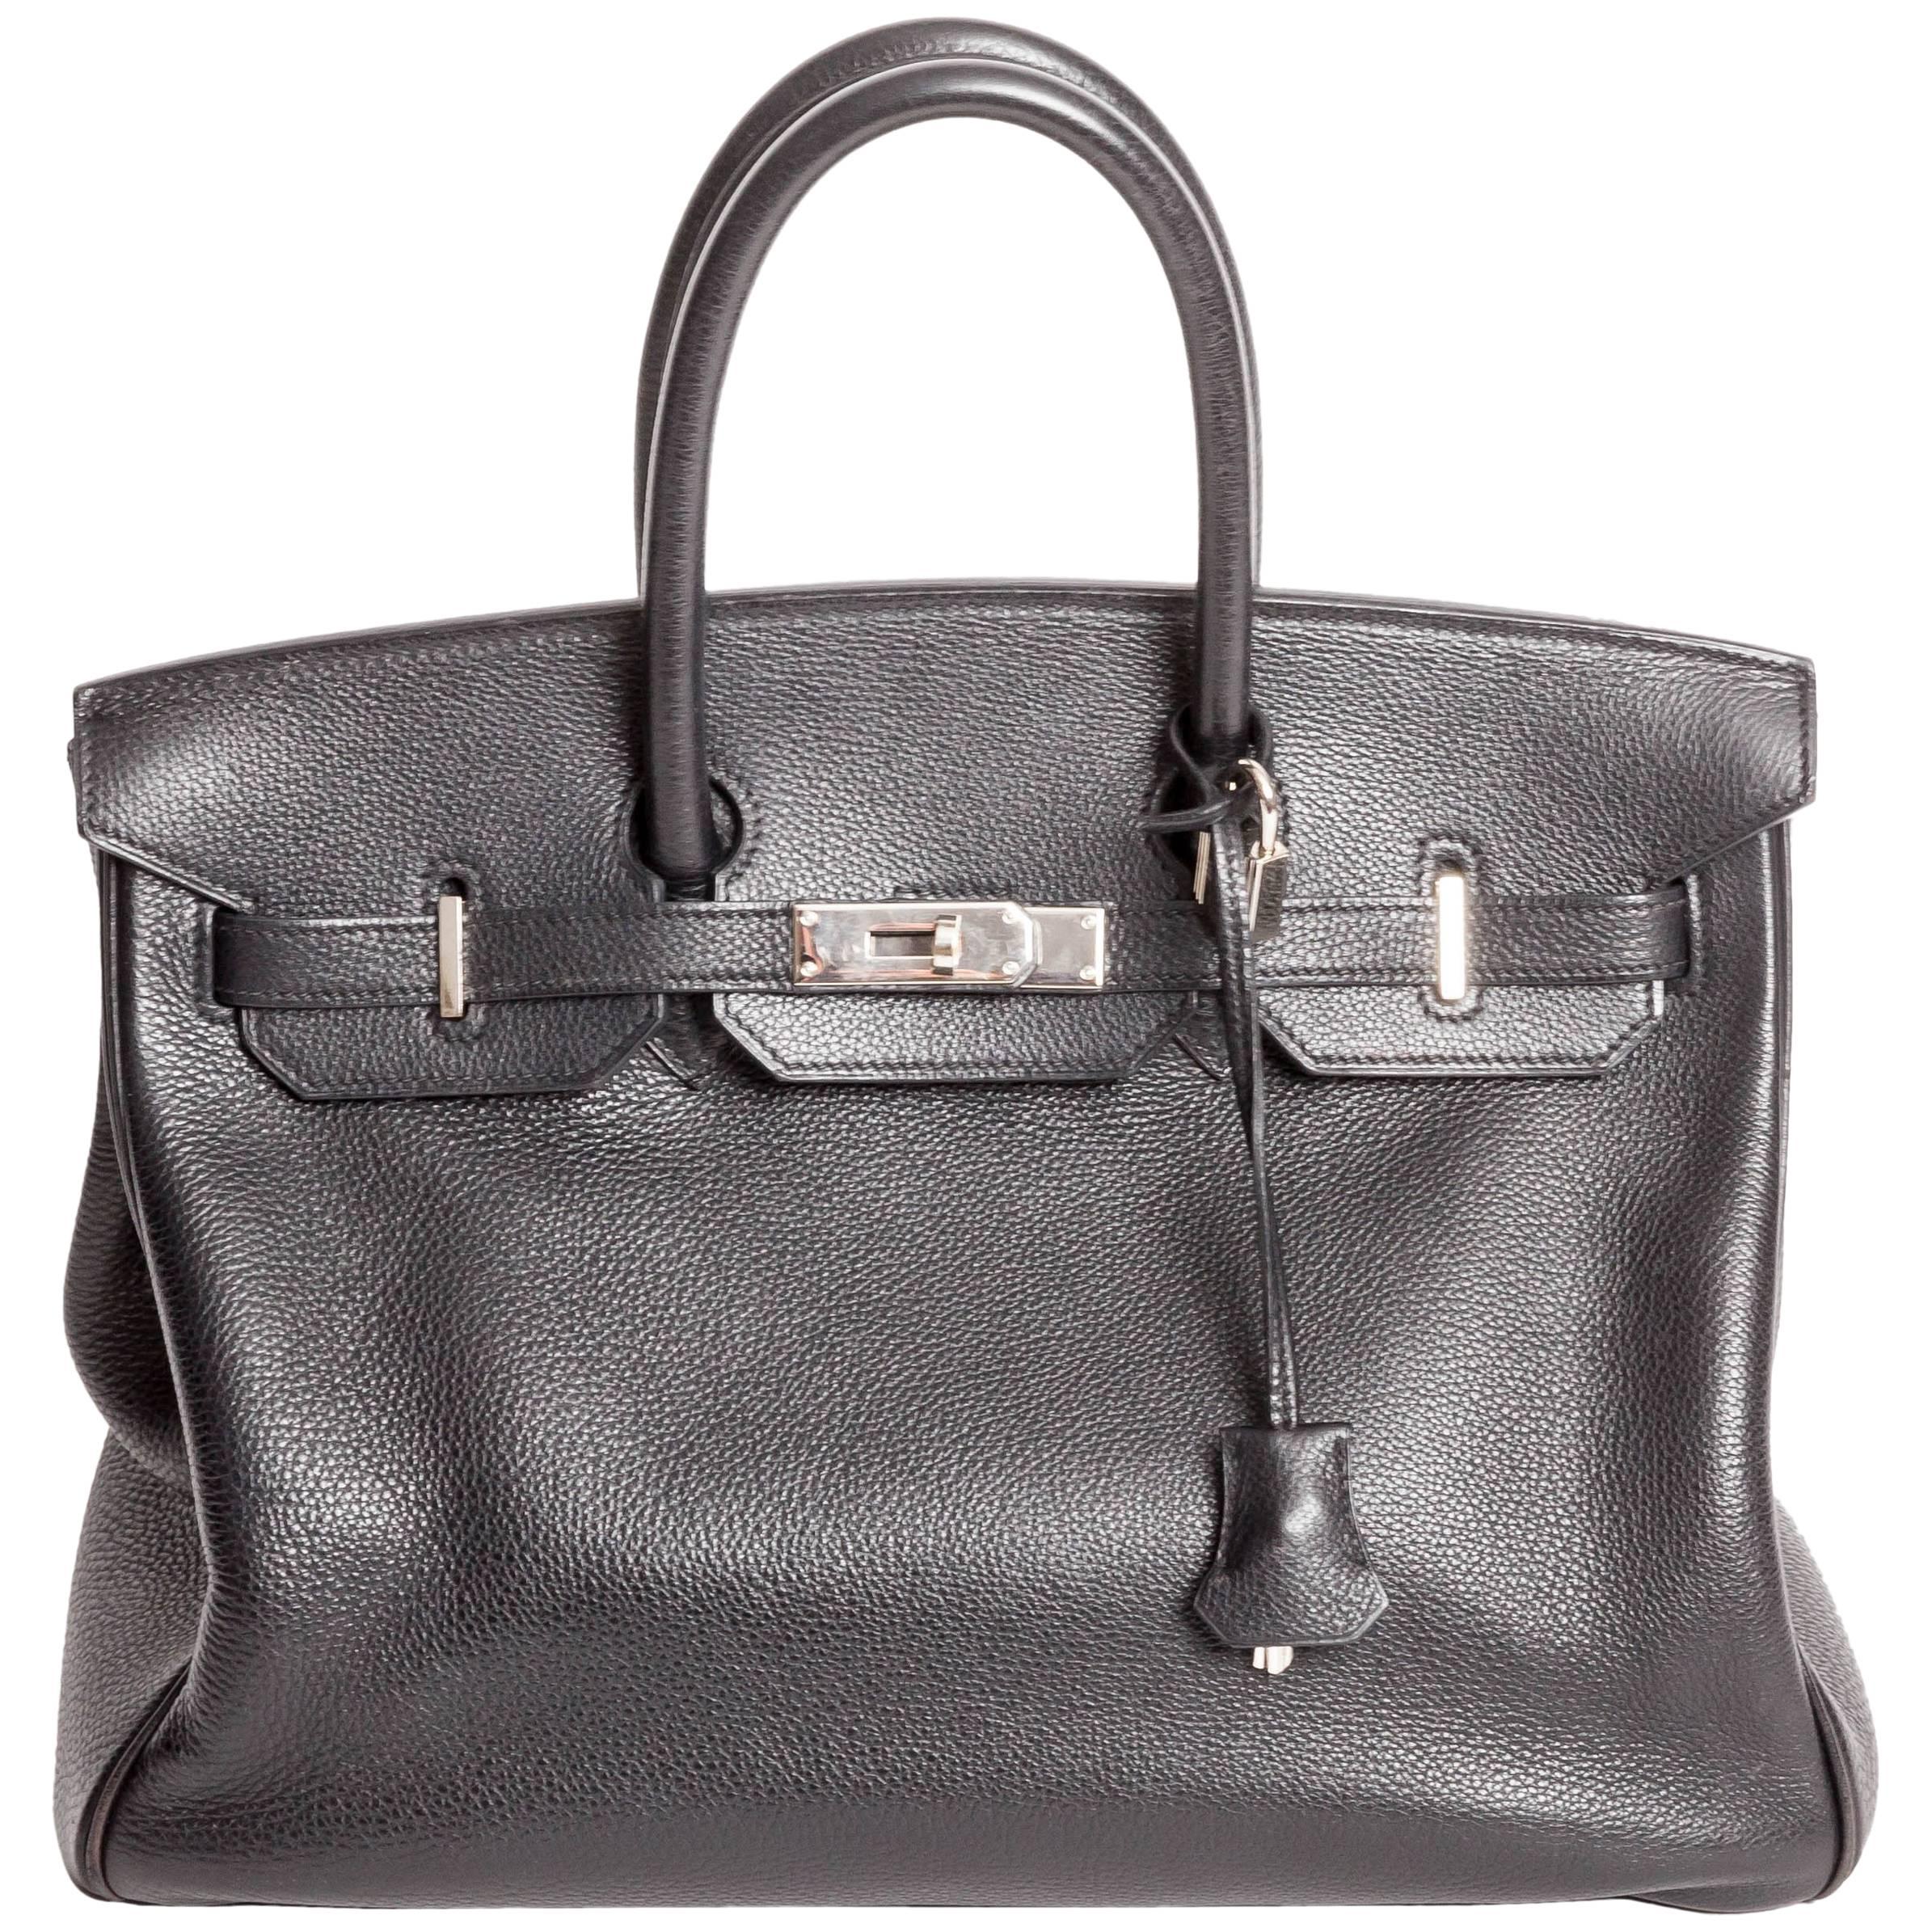 Hermes Noir / Black Togo Palladium Hardware Birkin Bag For Sale